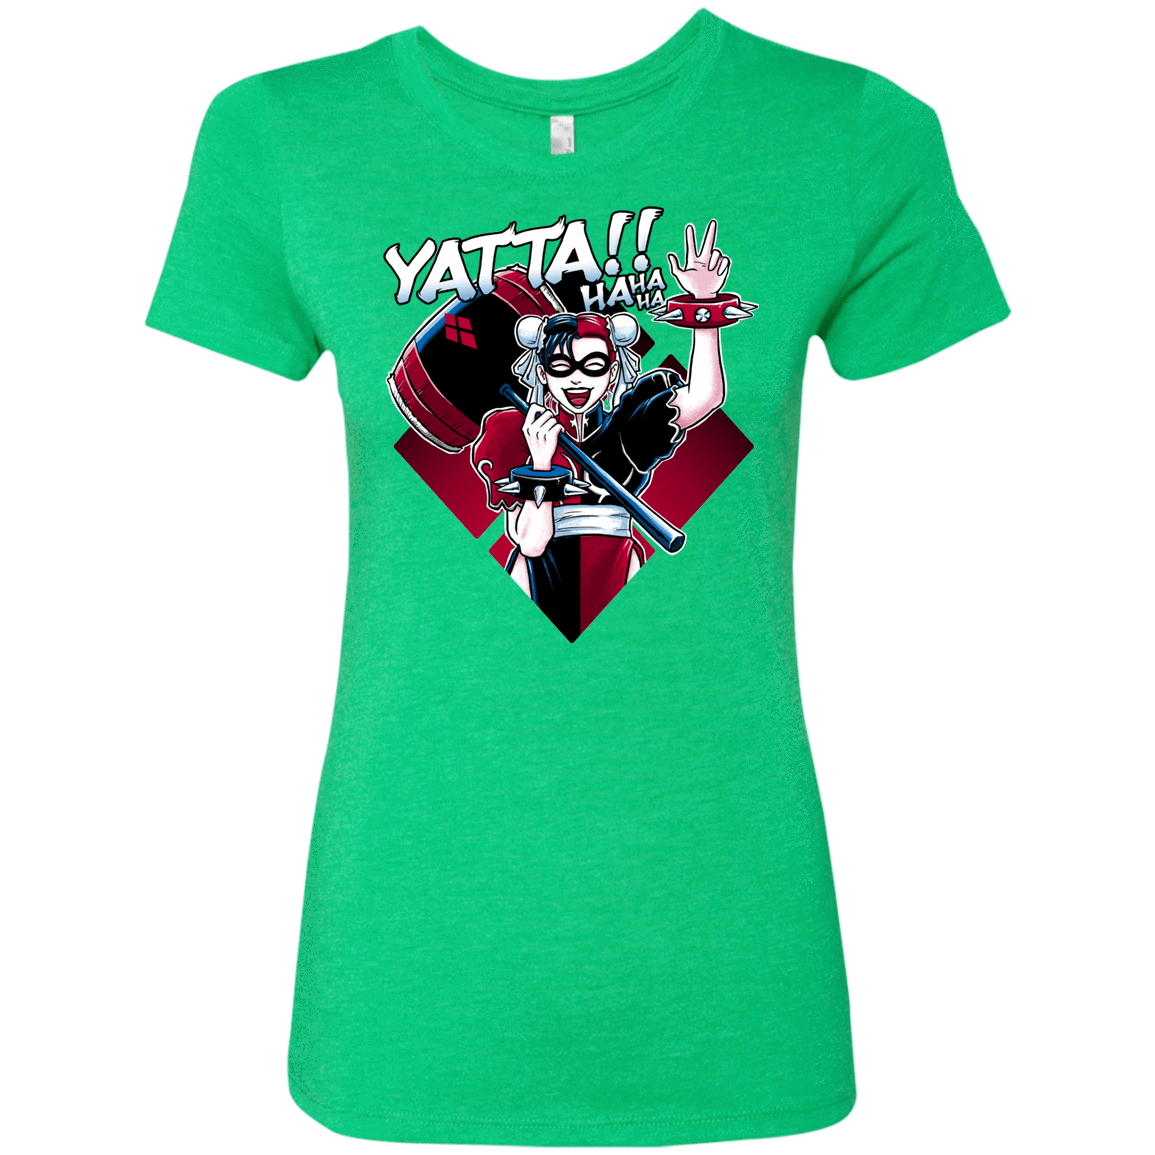 T-Shirts Envy / Small Harley Yatta Women's Triblend T-Shirt